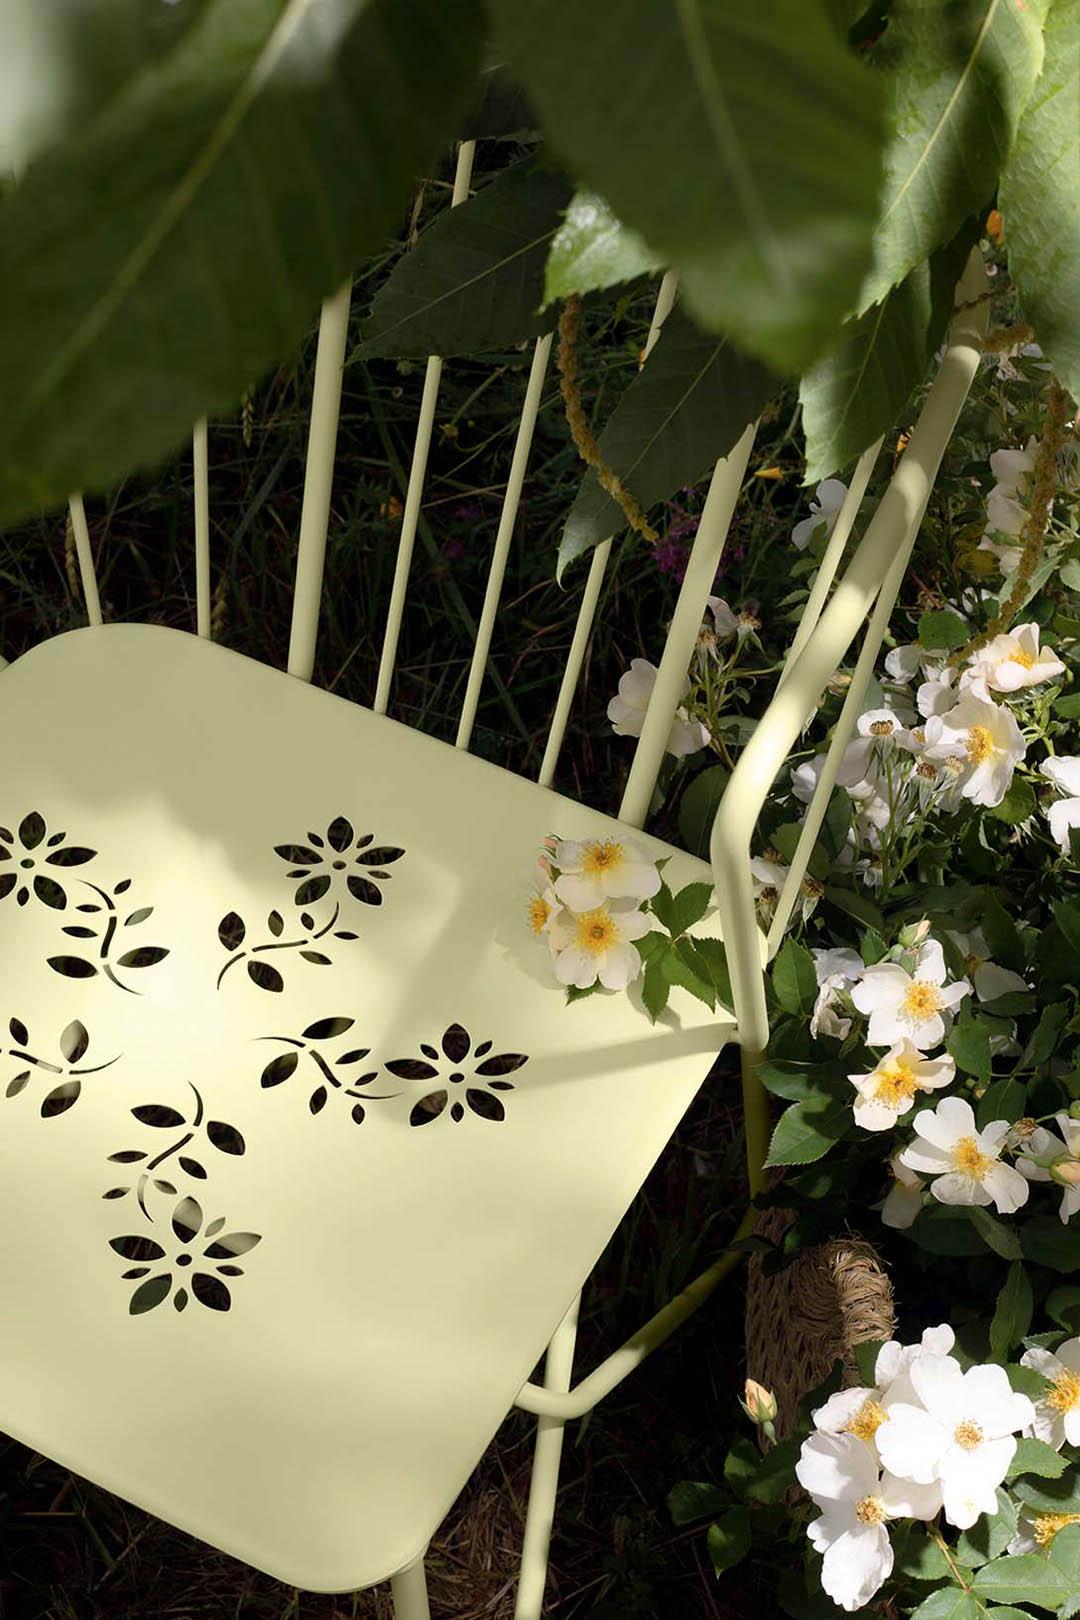 chaise metal flower, chaise de jardin, chaise metal perforee, chaise fermob, chair metal flower, garden chair, chair metal perforated, chair fermob